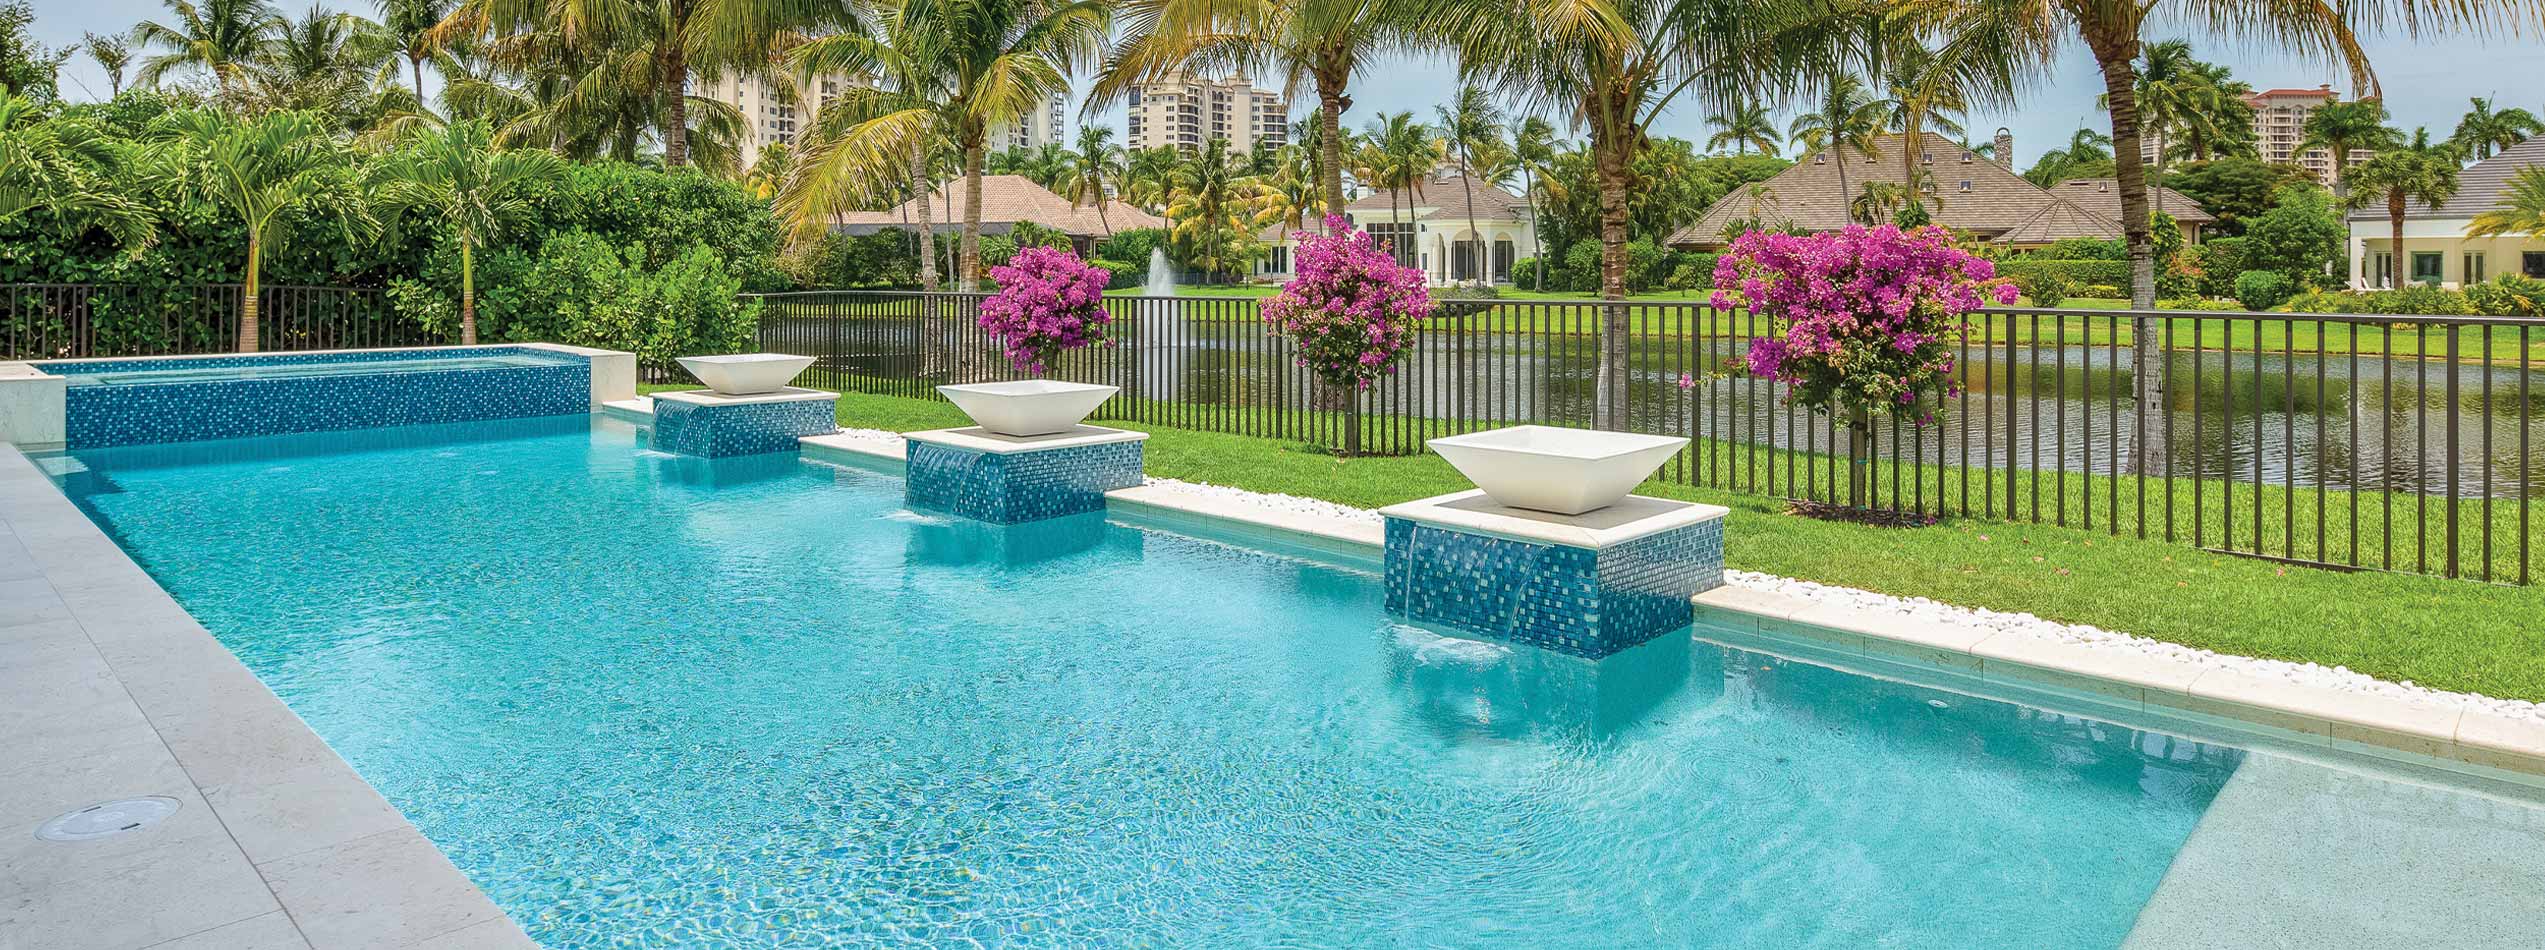 Pool Lanai | Riverview Homes, Naples Florida Luxury Home Builders